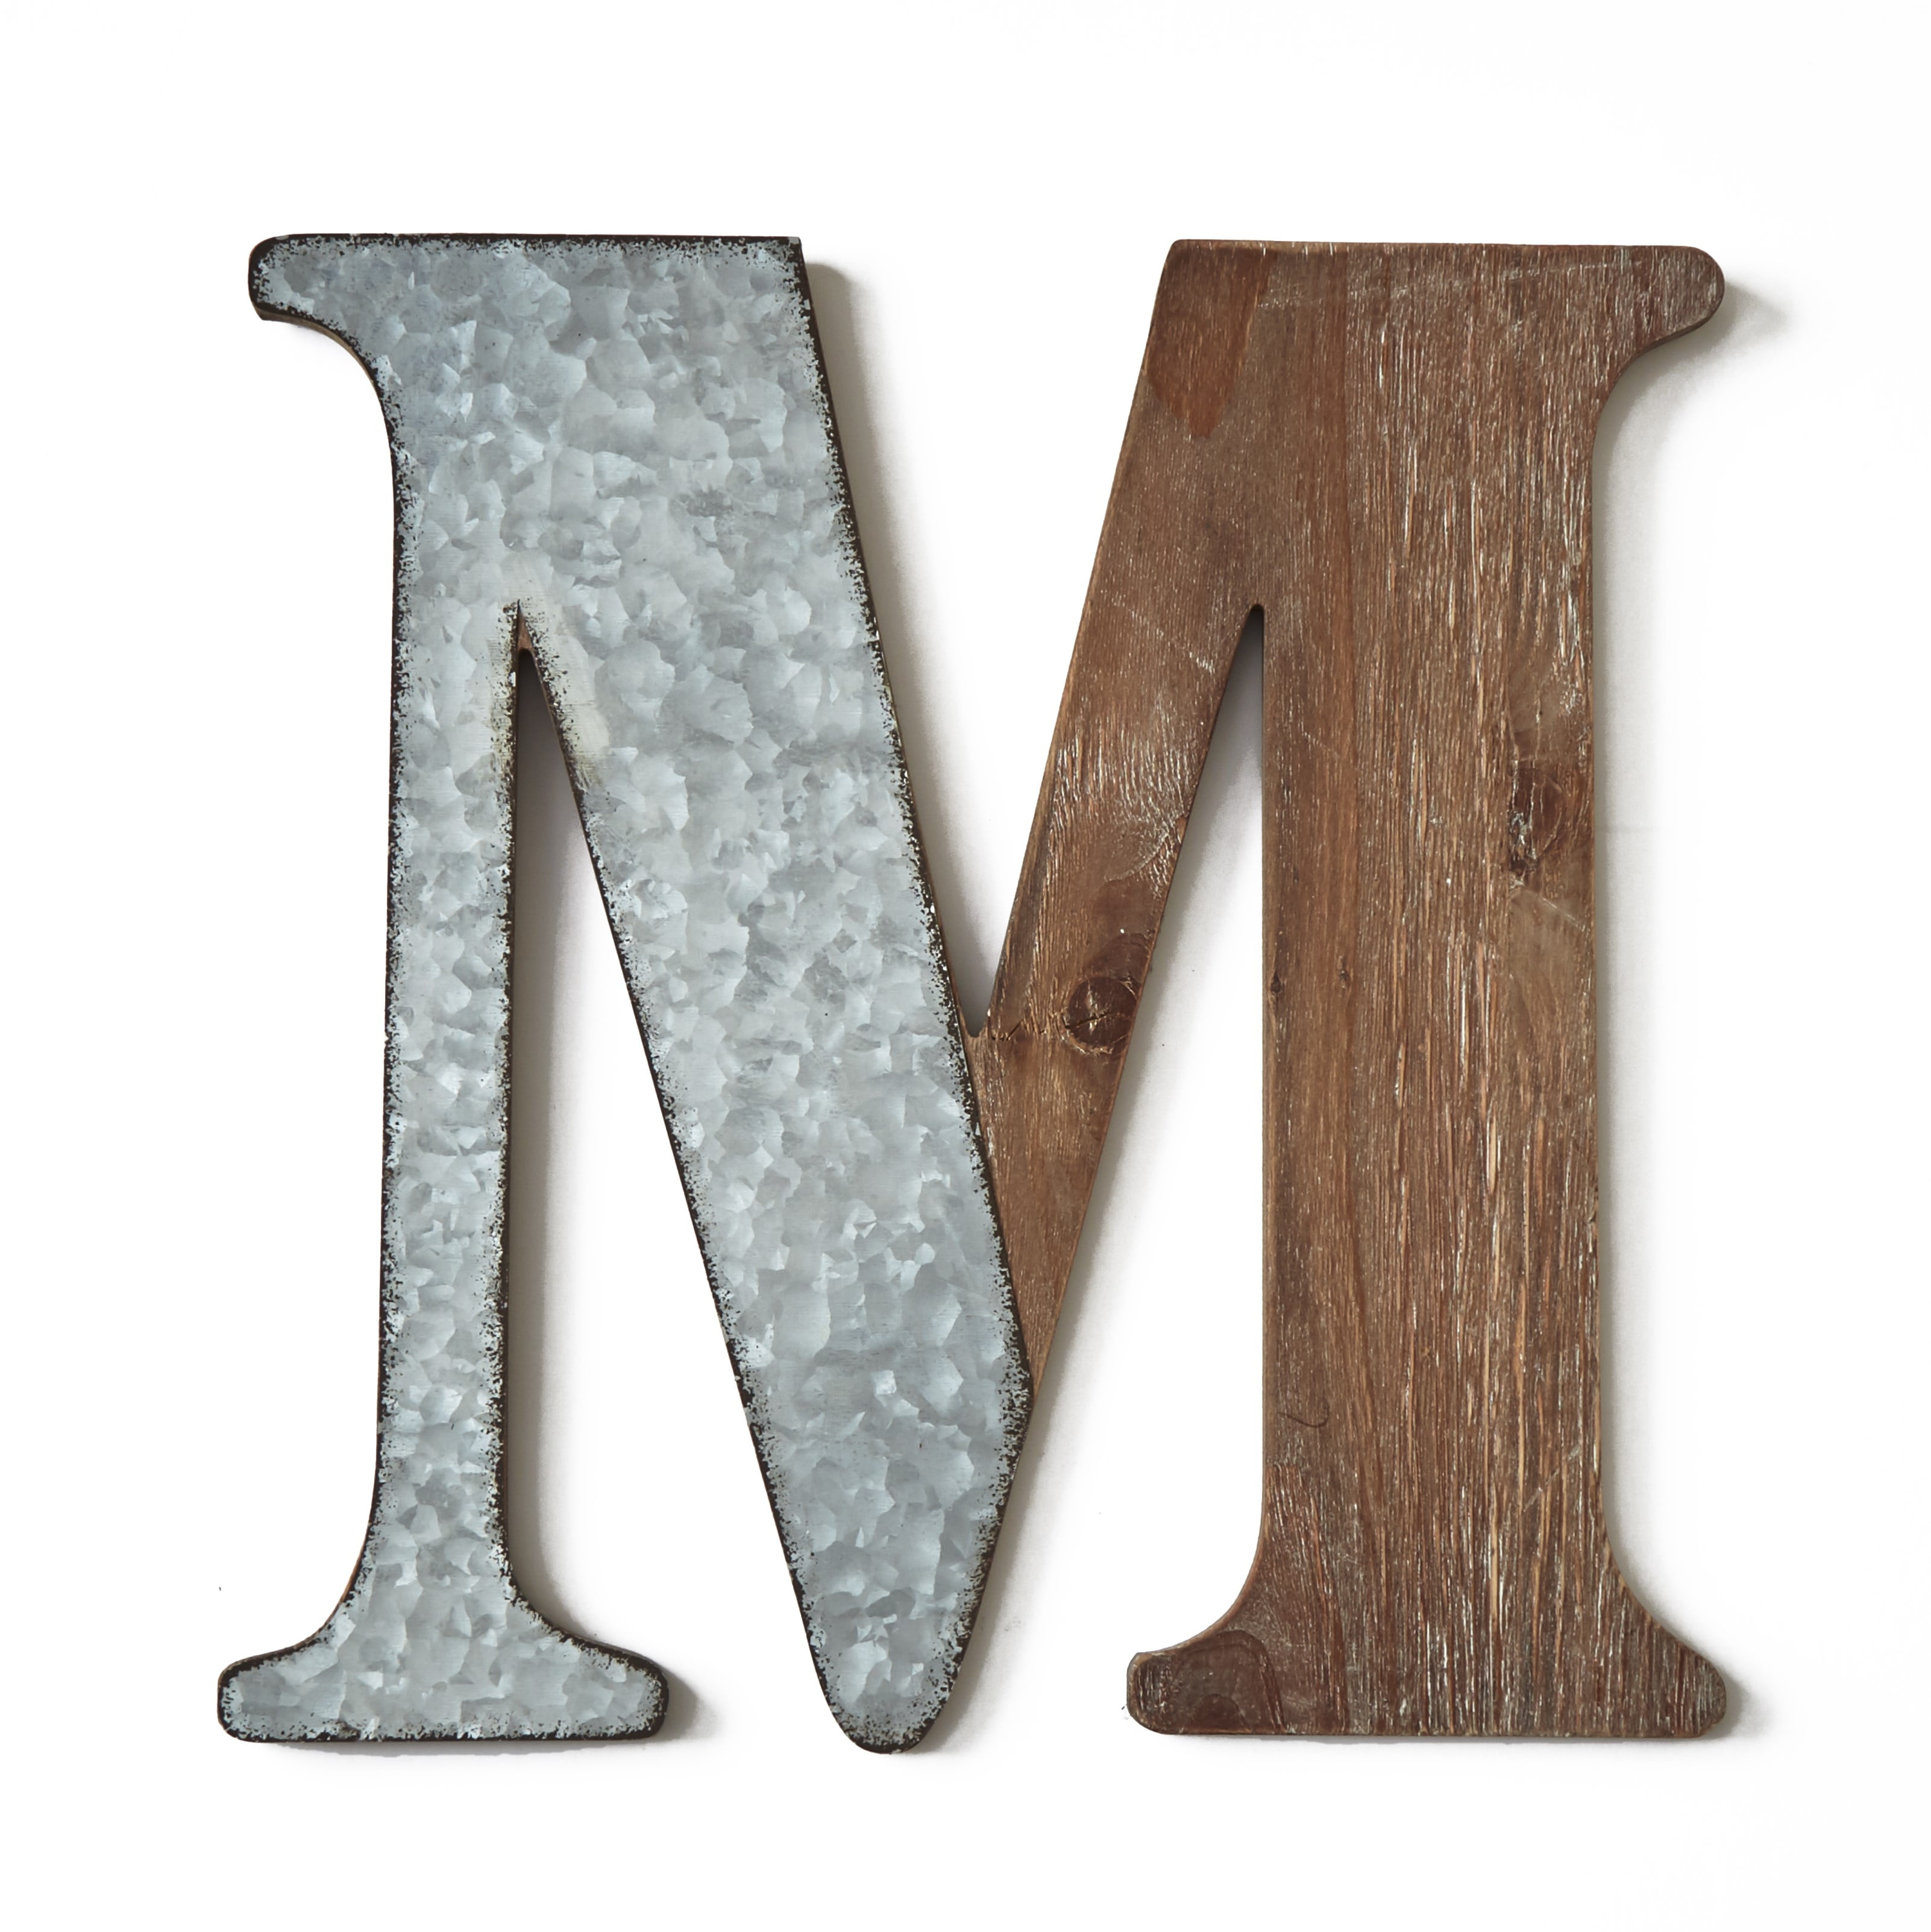 Wood & Metal Wall Letters - Decorative Galvanized Rustic Wall Art ...